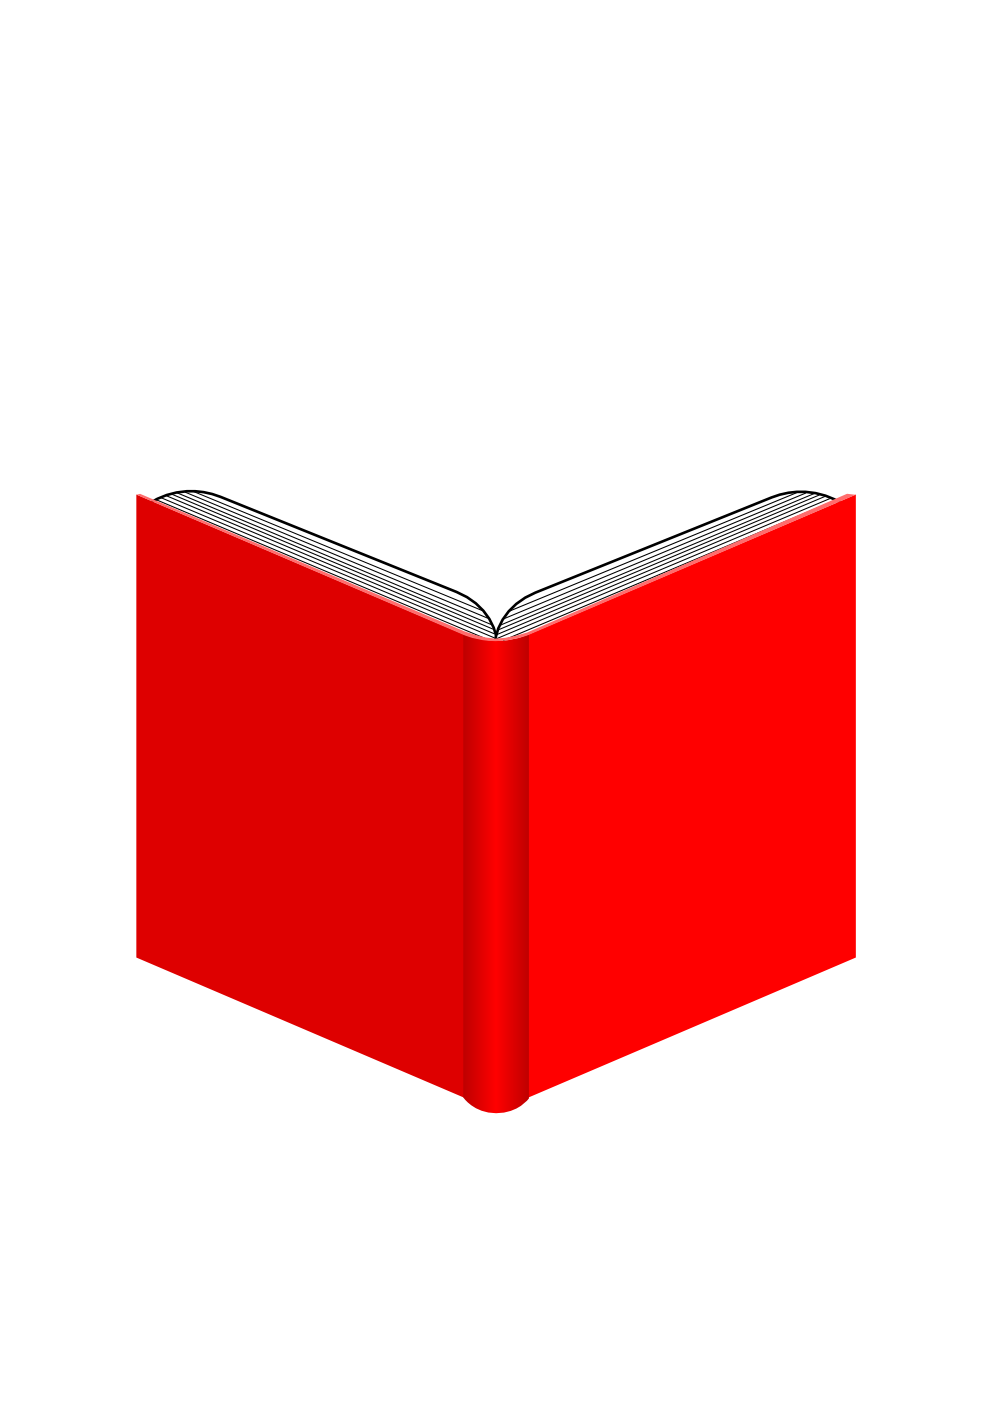 red art text book